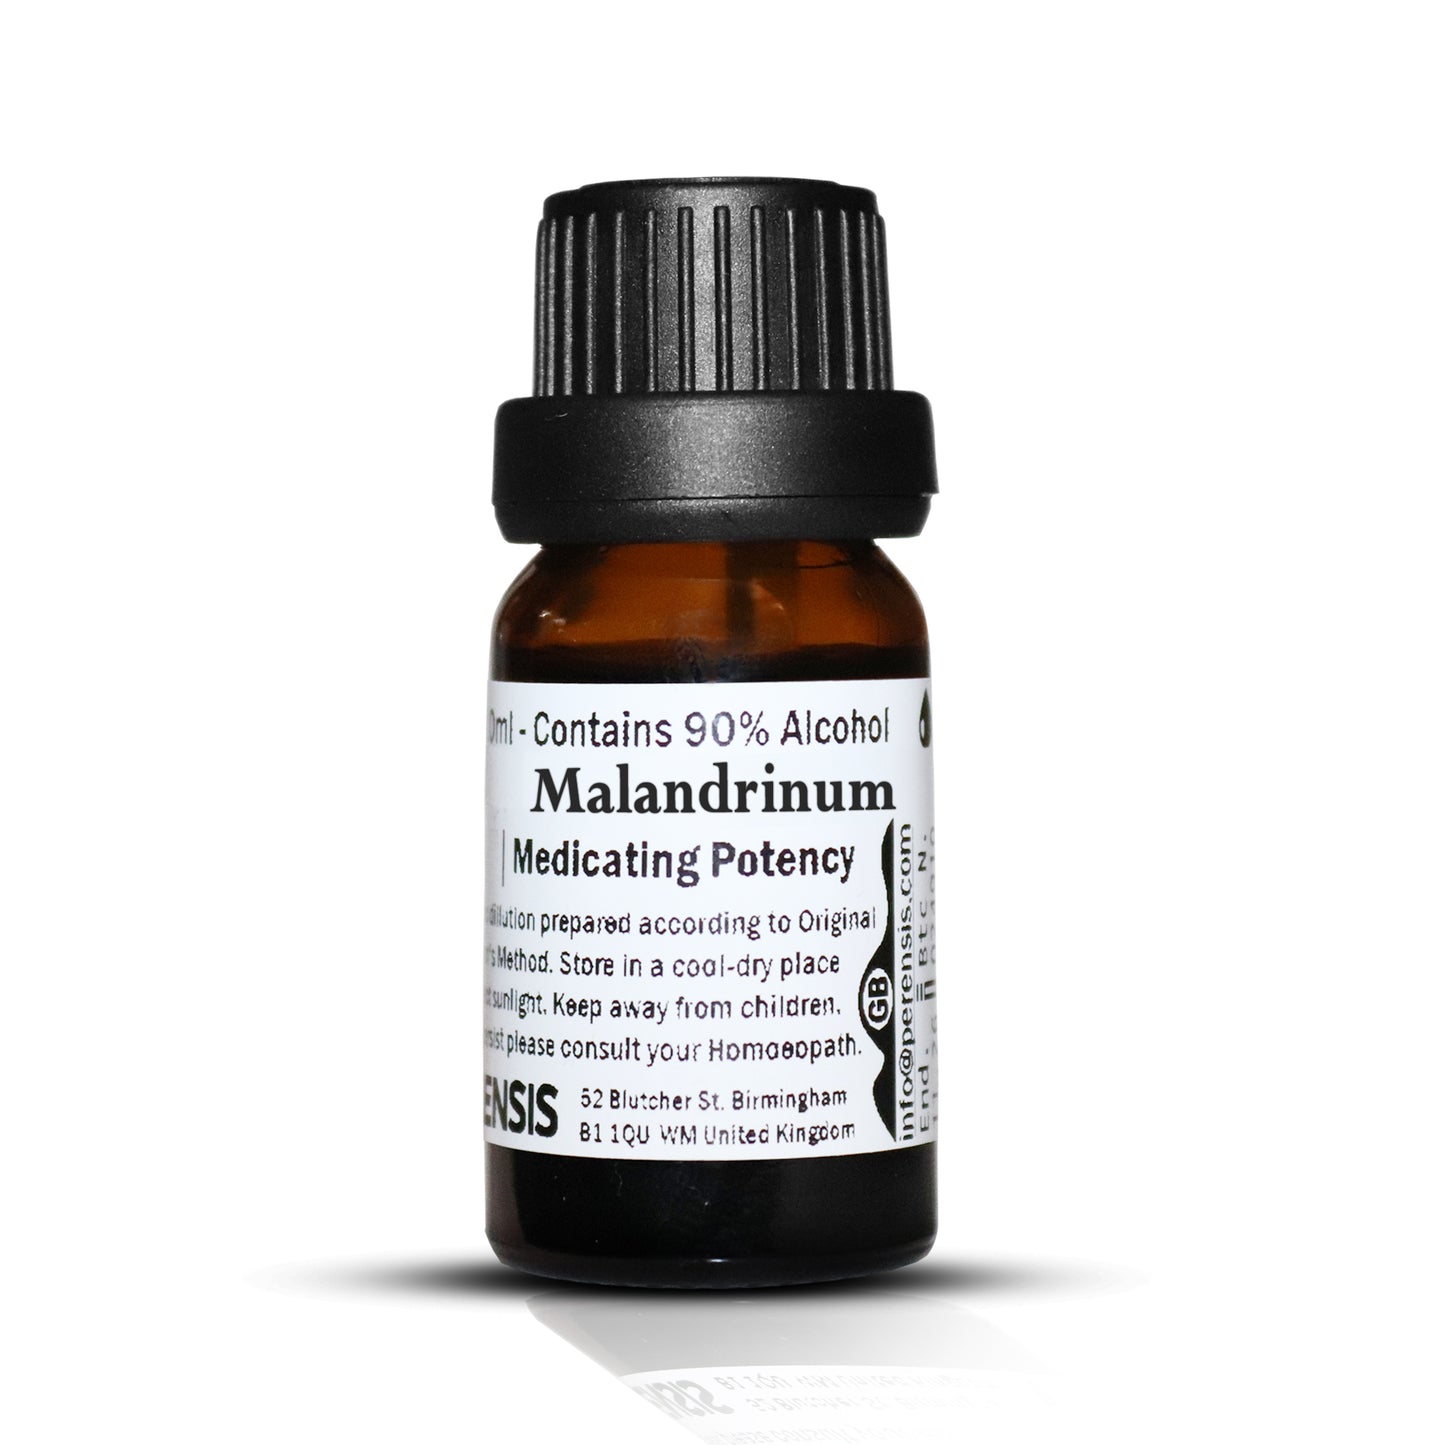 Malandrinum